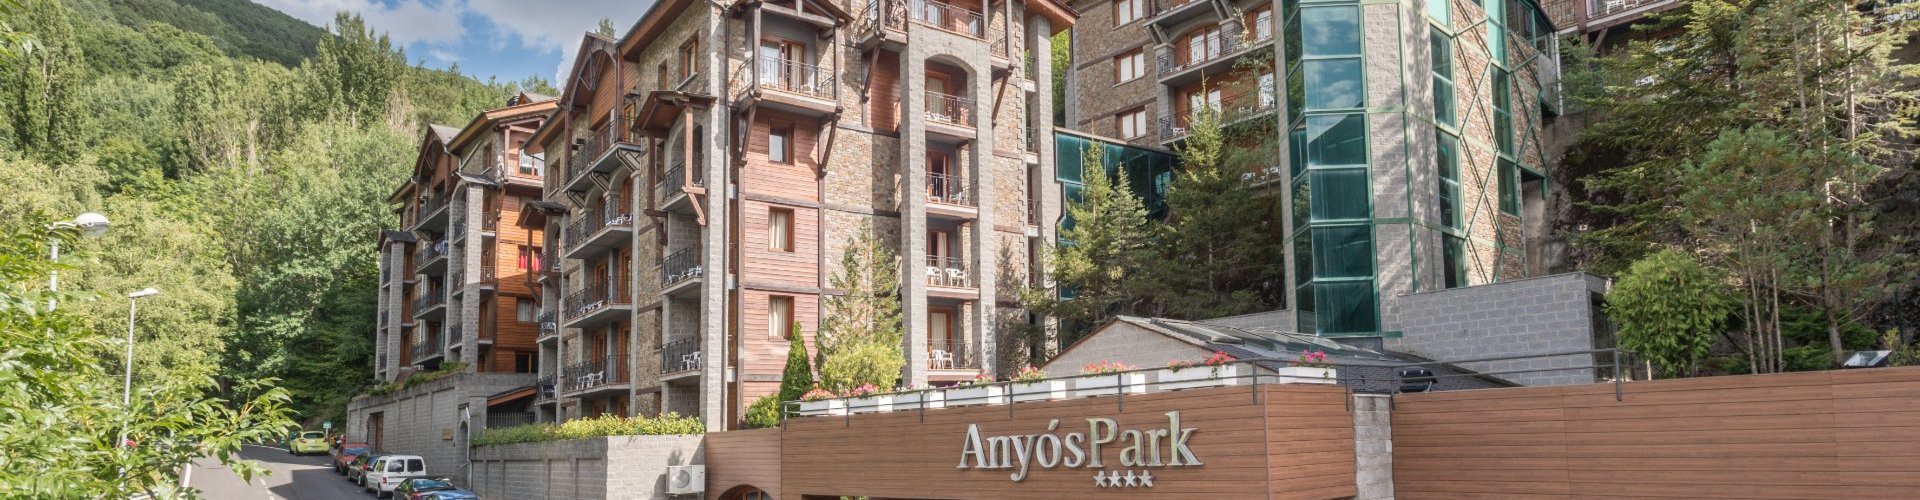 Anyospark corporativa (redesign) - Ла-Массана - 